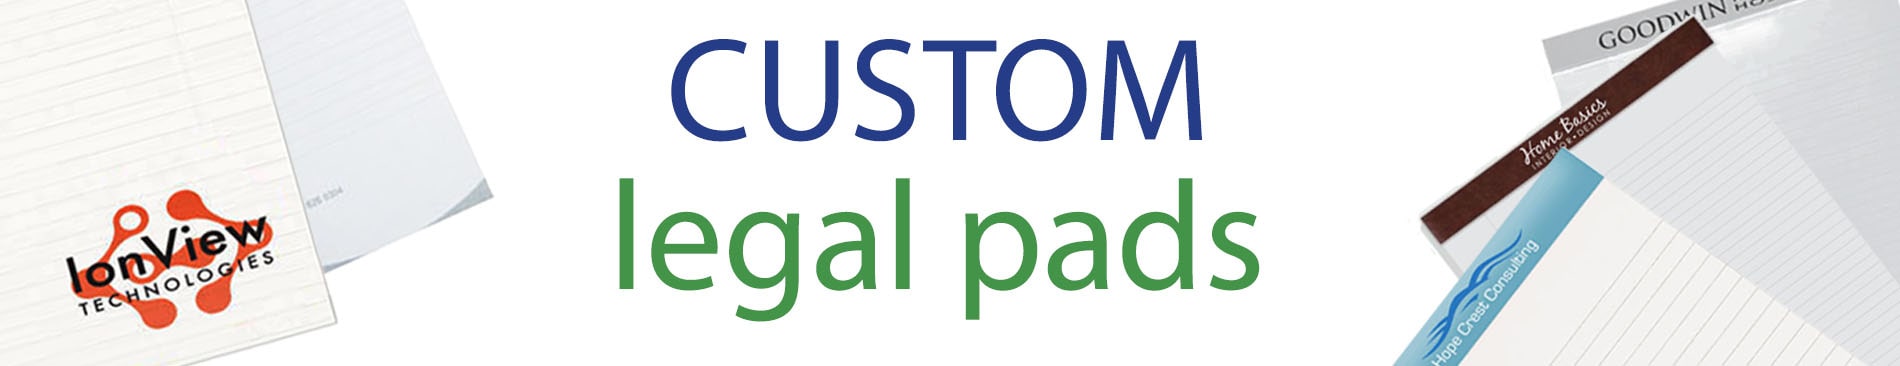 custom legal pads